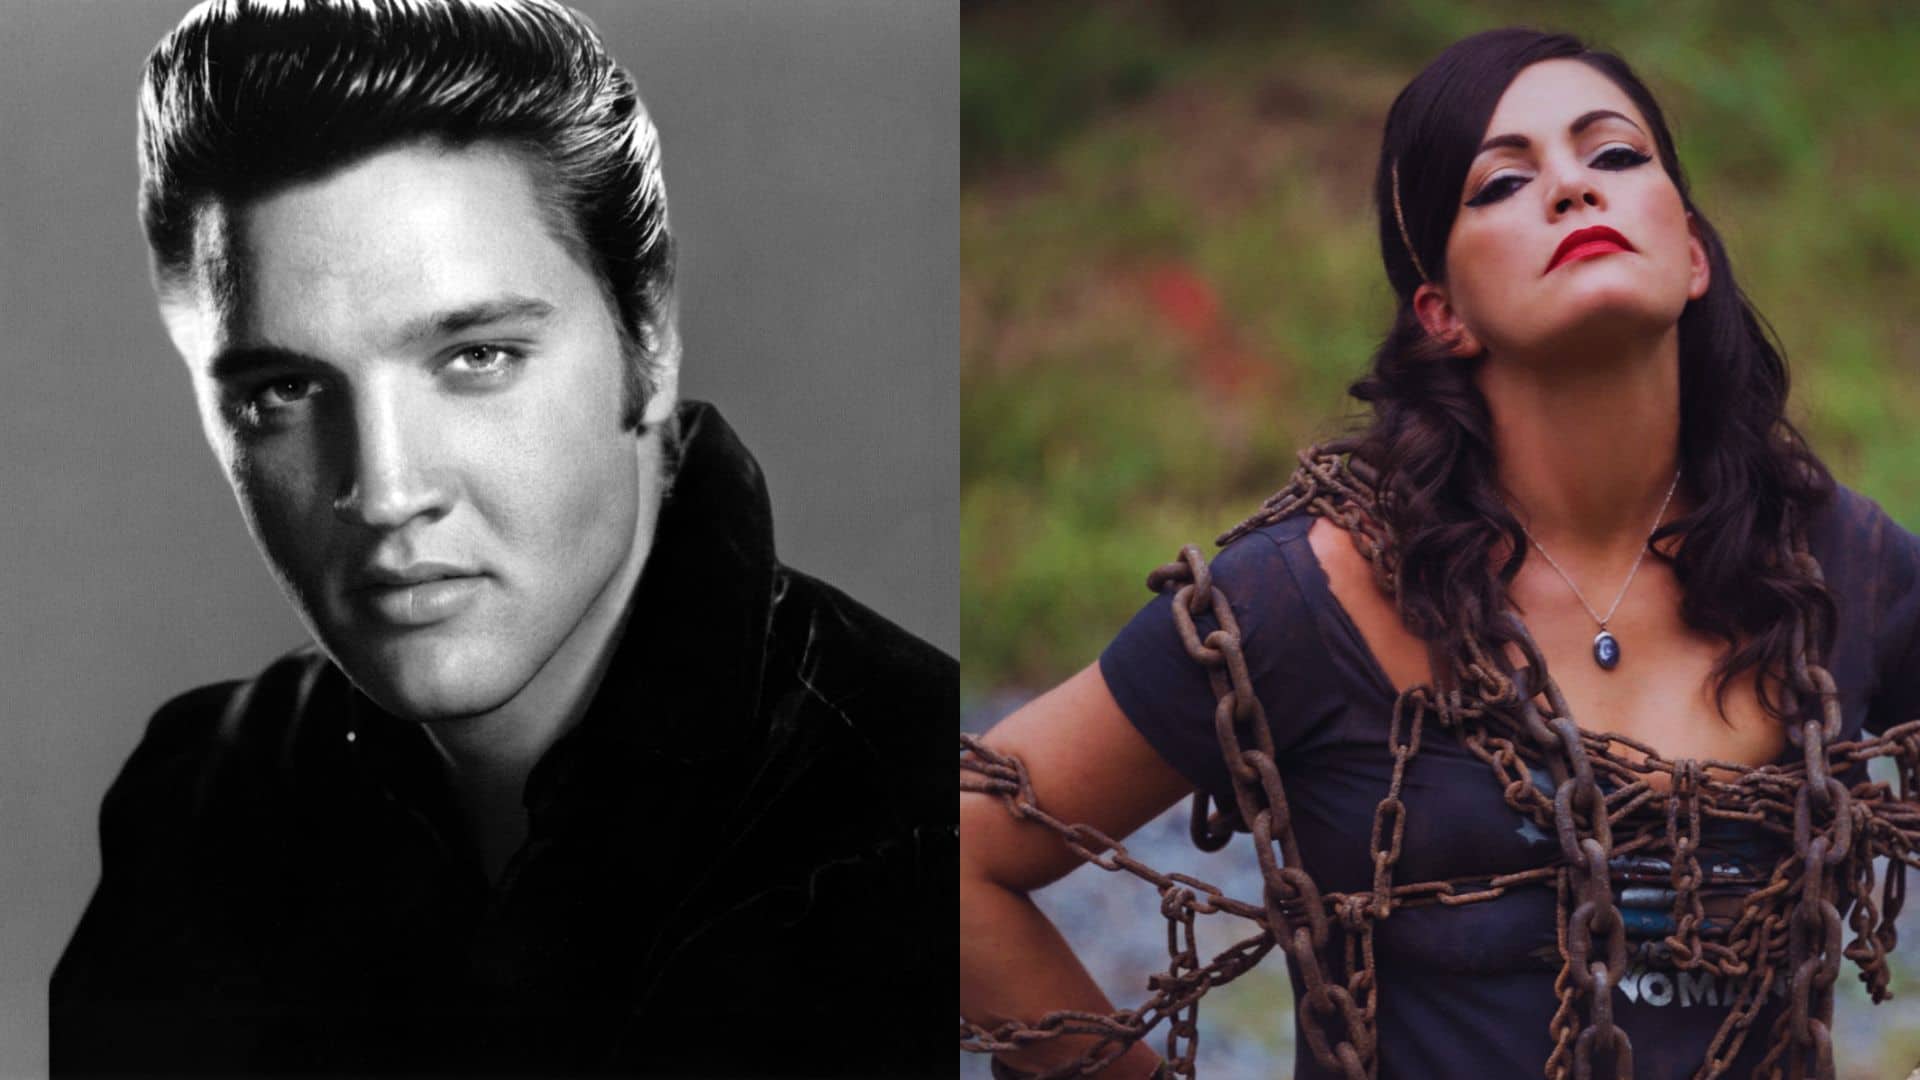 Elvis and Angaleena related?